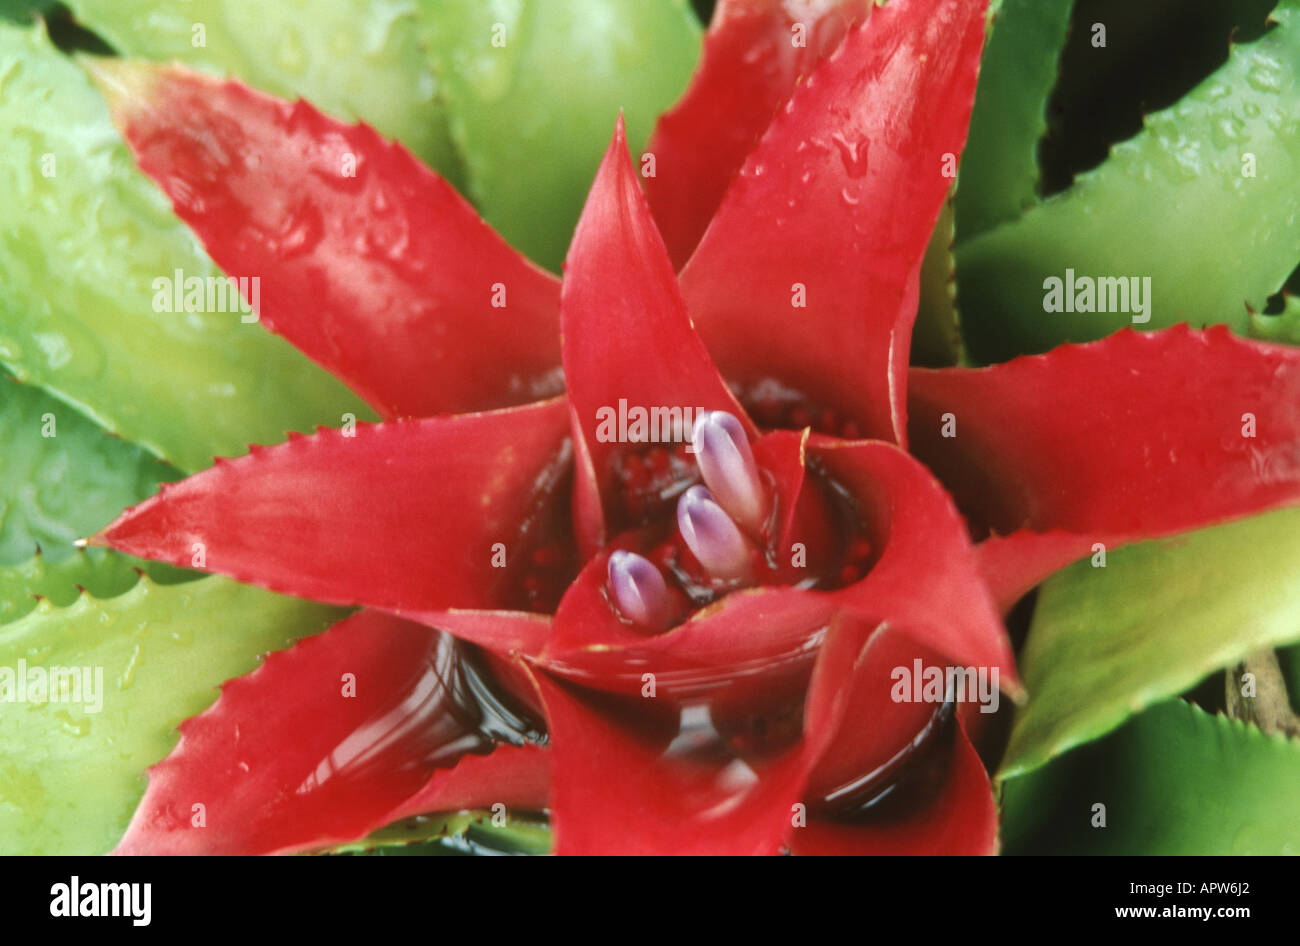 Blushing Bromeliad (Nidularium fulgens), in bud with red coulered bracts Stock Photo